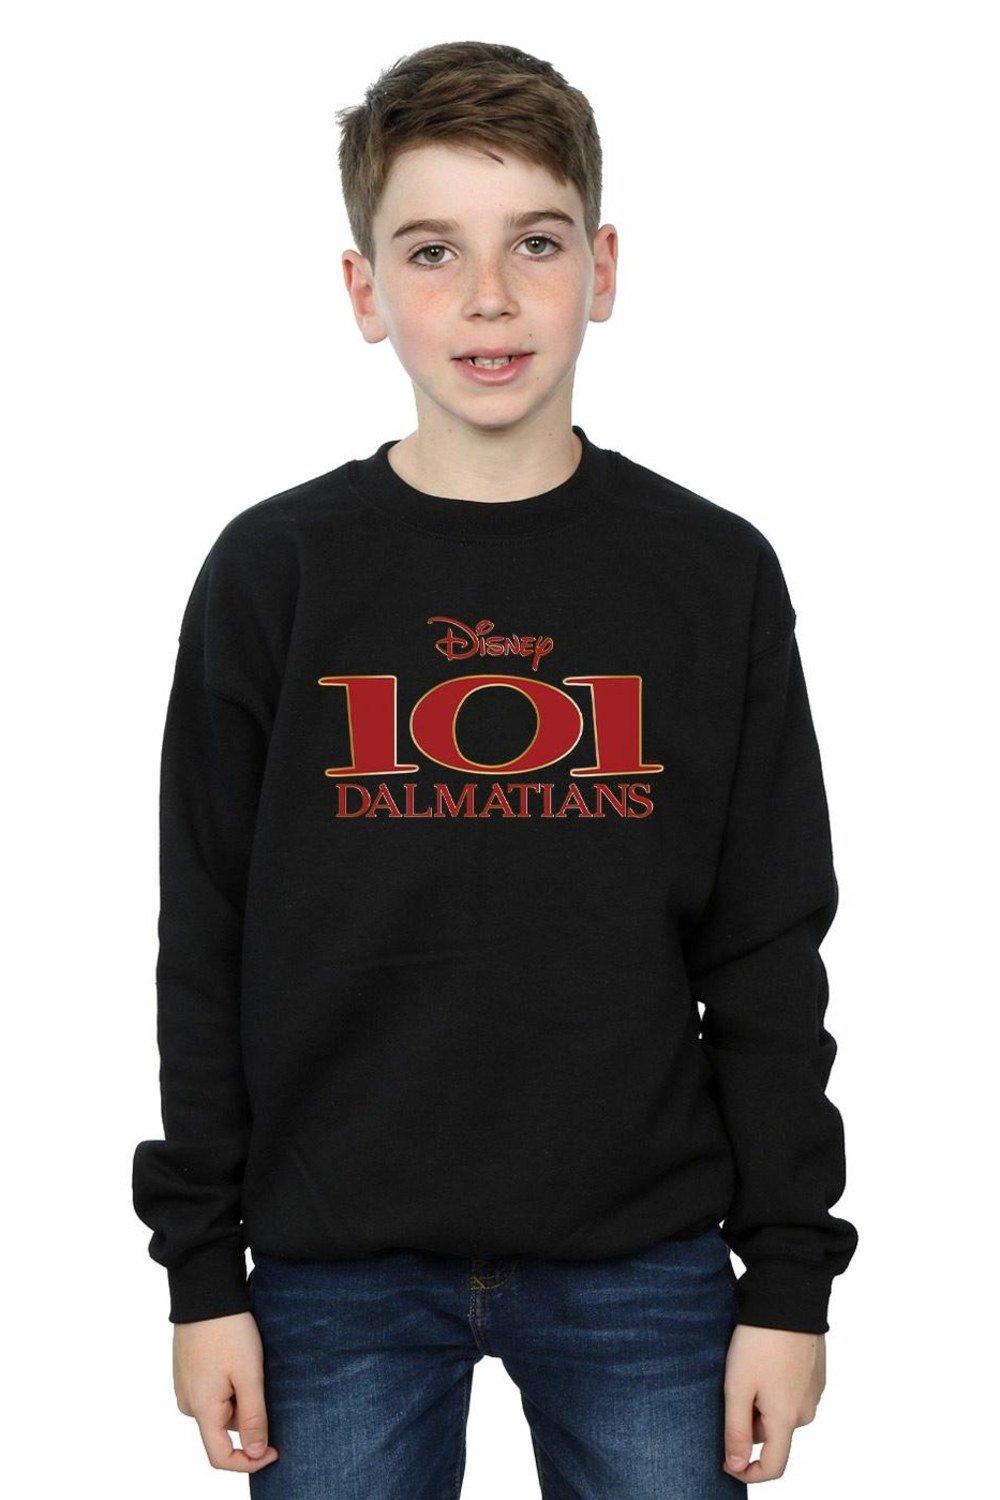 101 Dalmatians Logo Sweatshirt